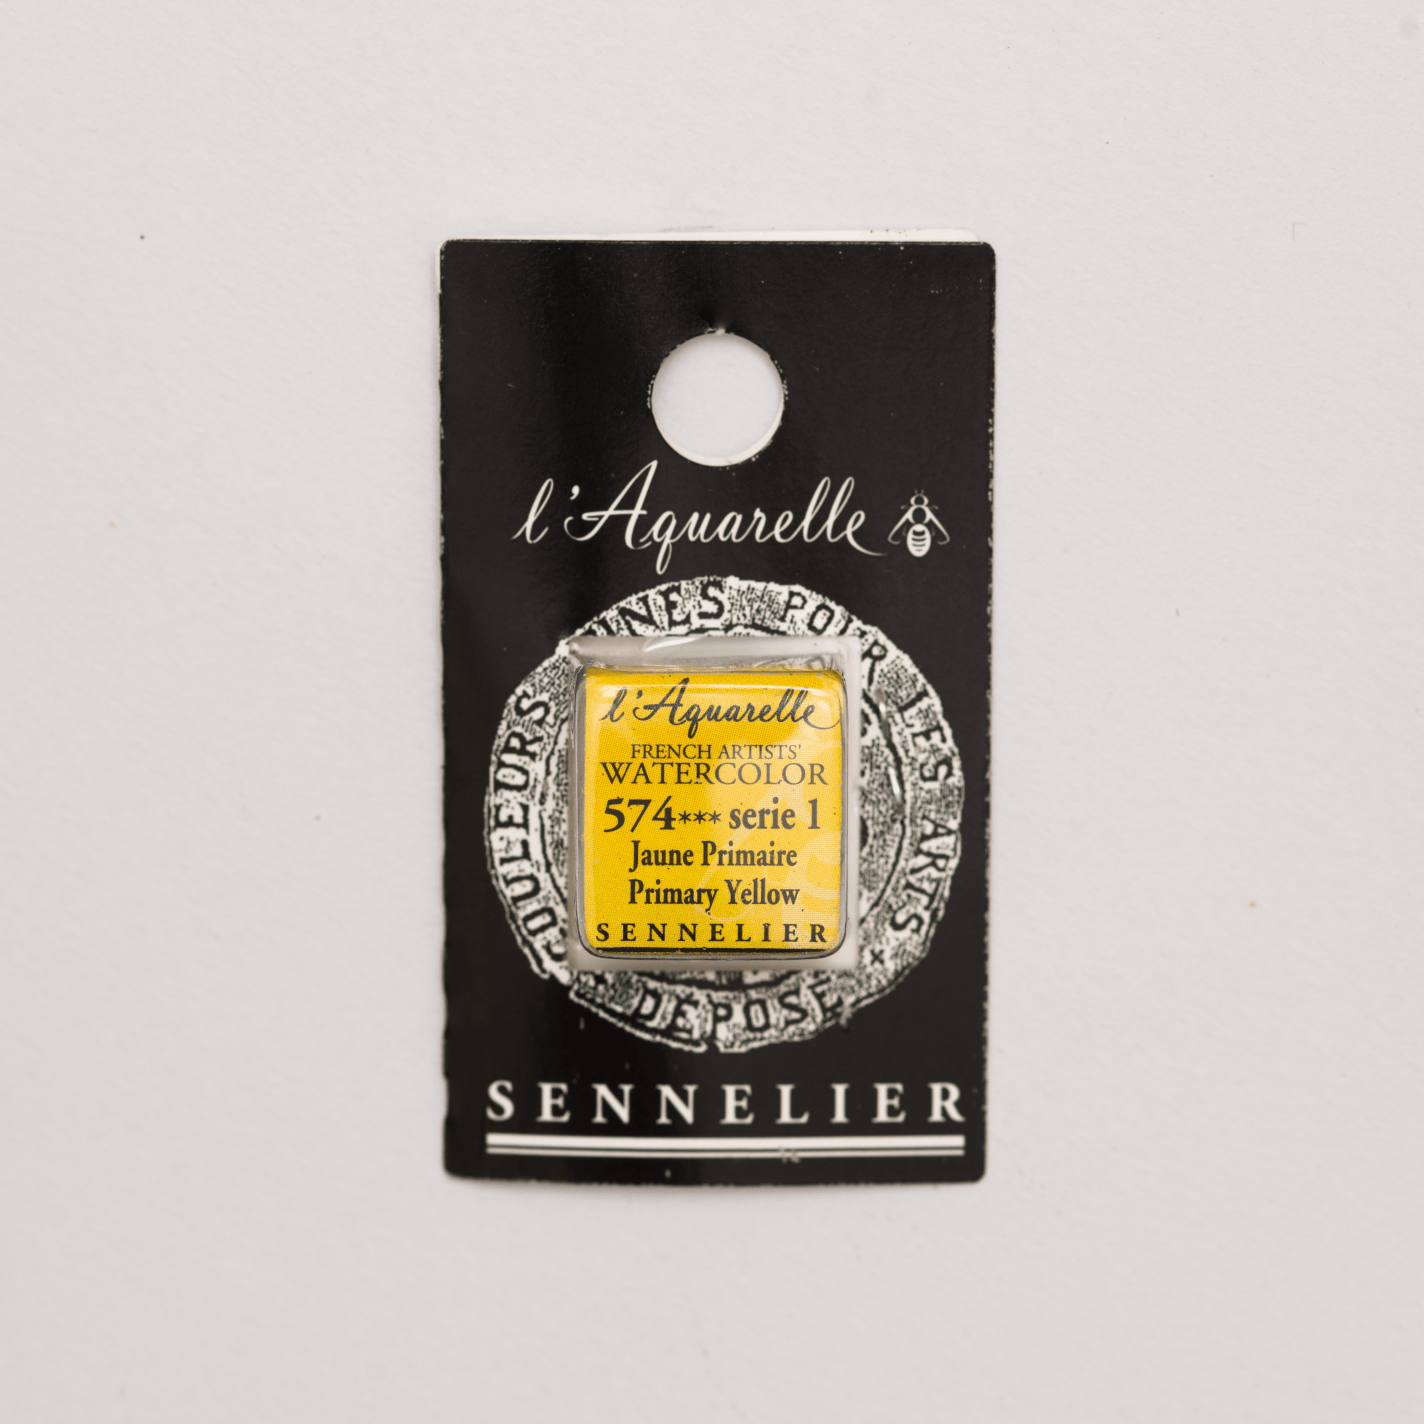 Sennelier Aquarelle pans 1/2 pan Primary Yellow